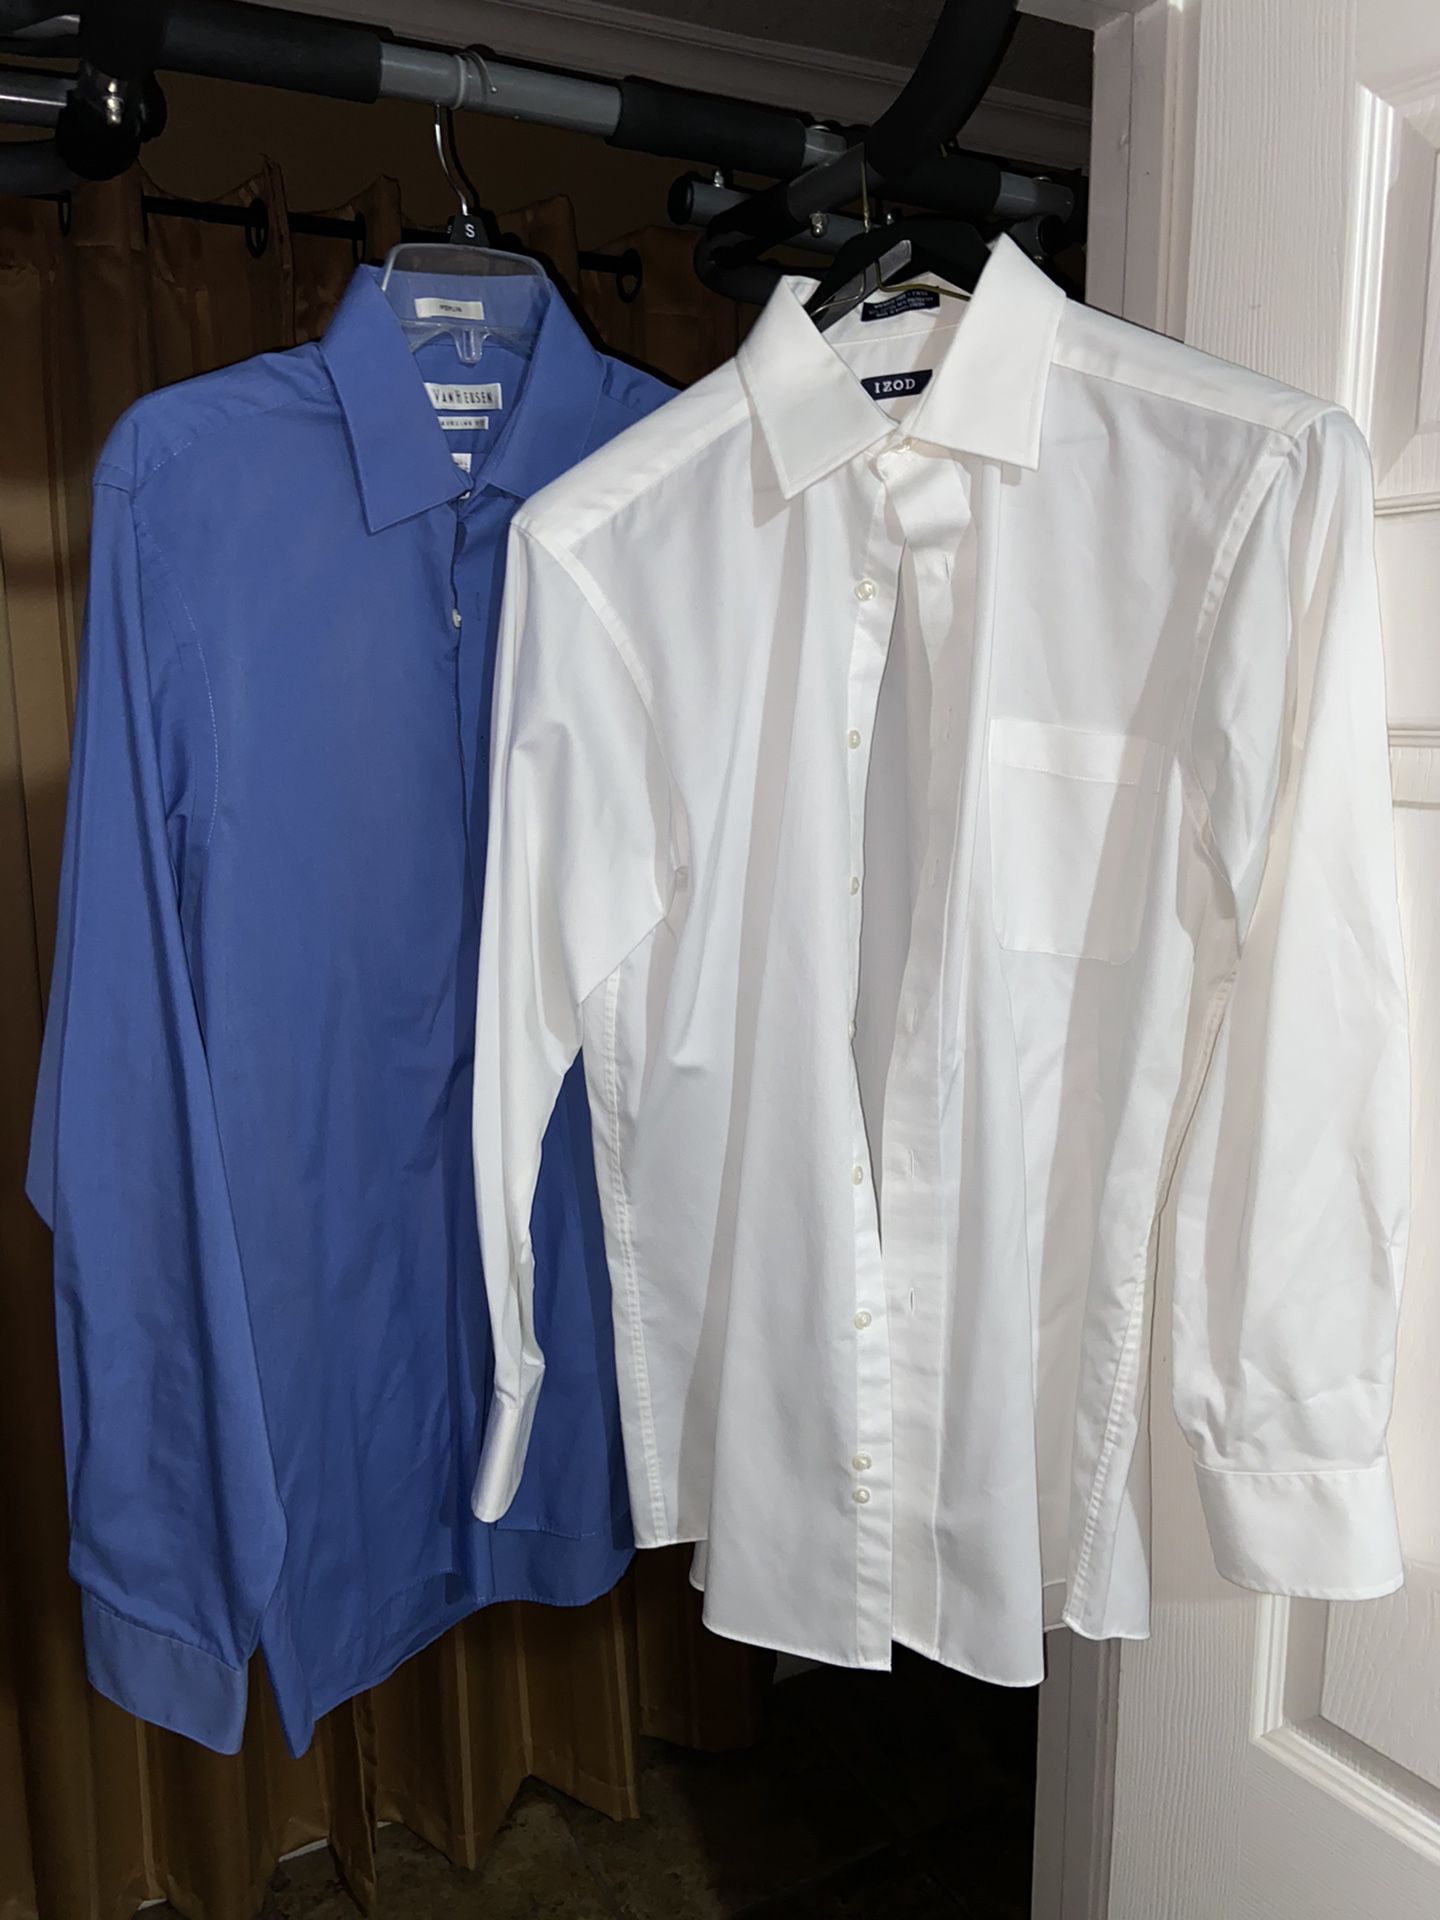 2 dress shirts blue and white